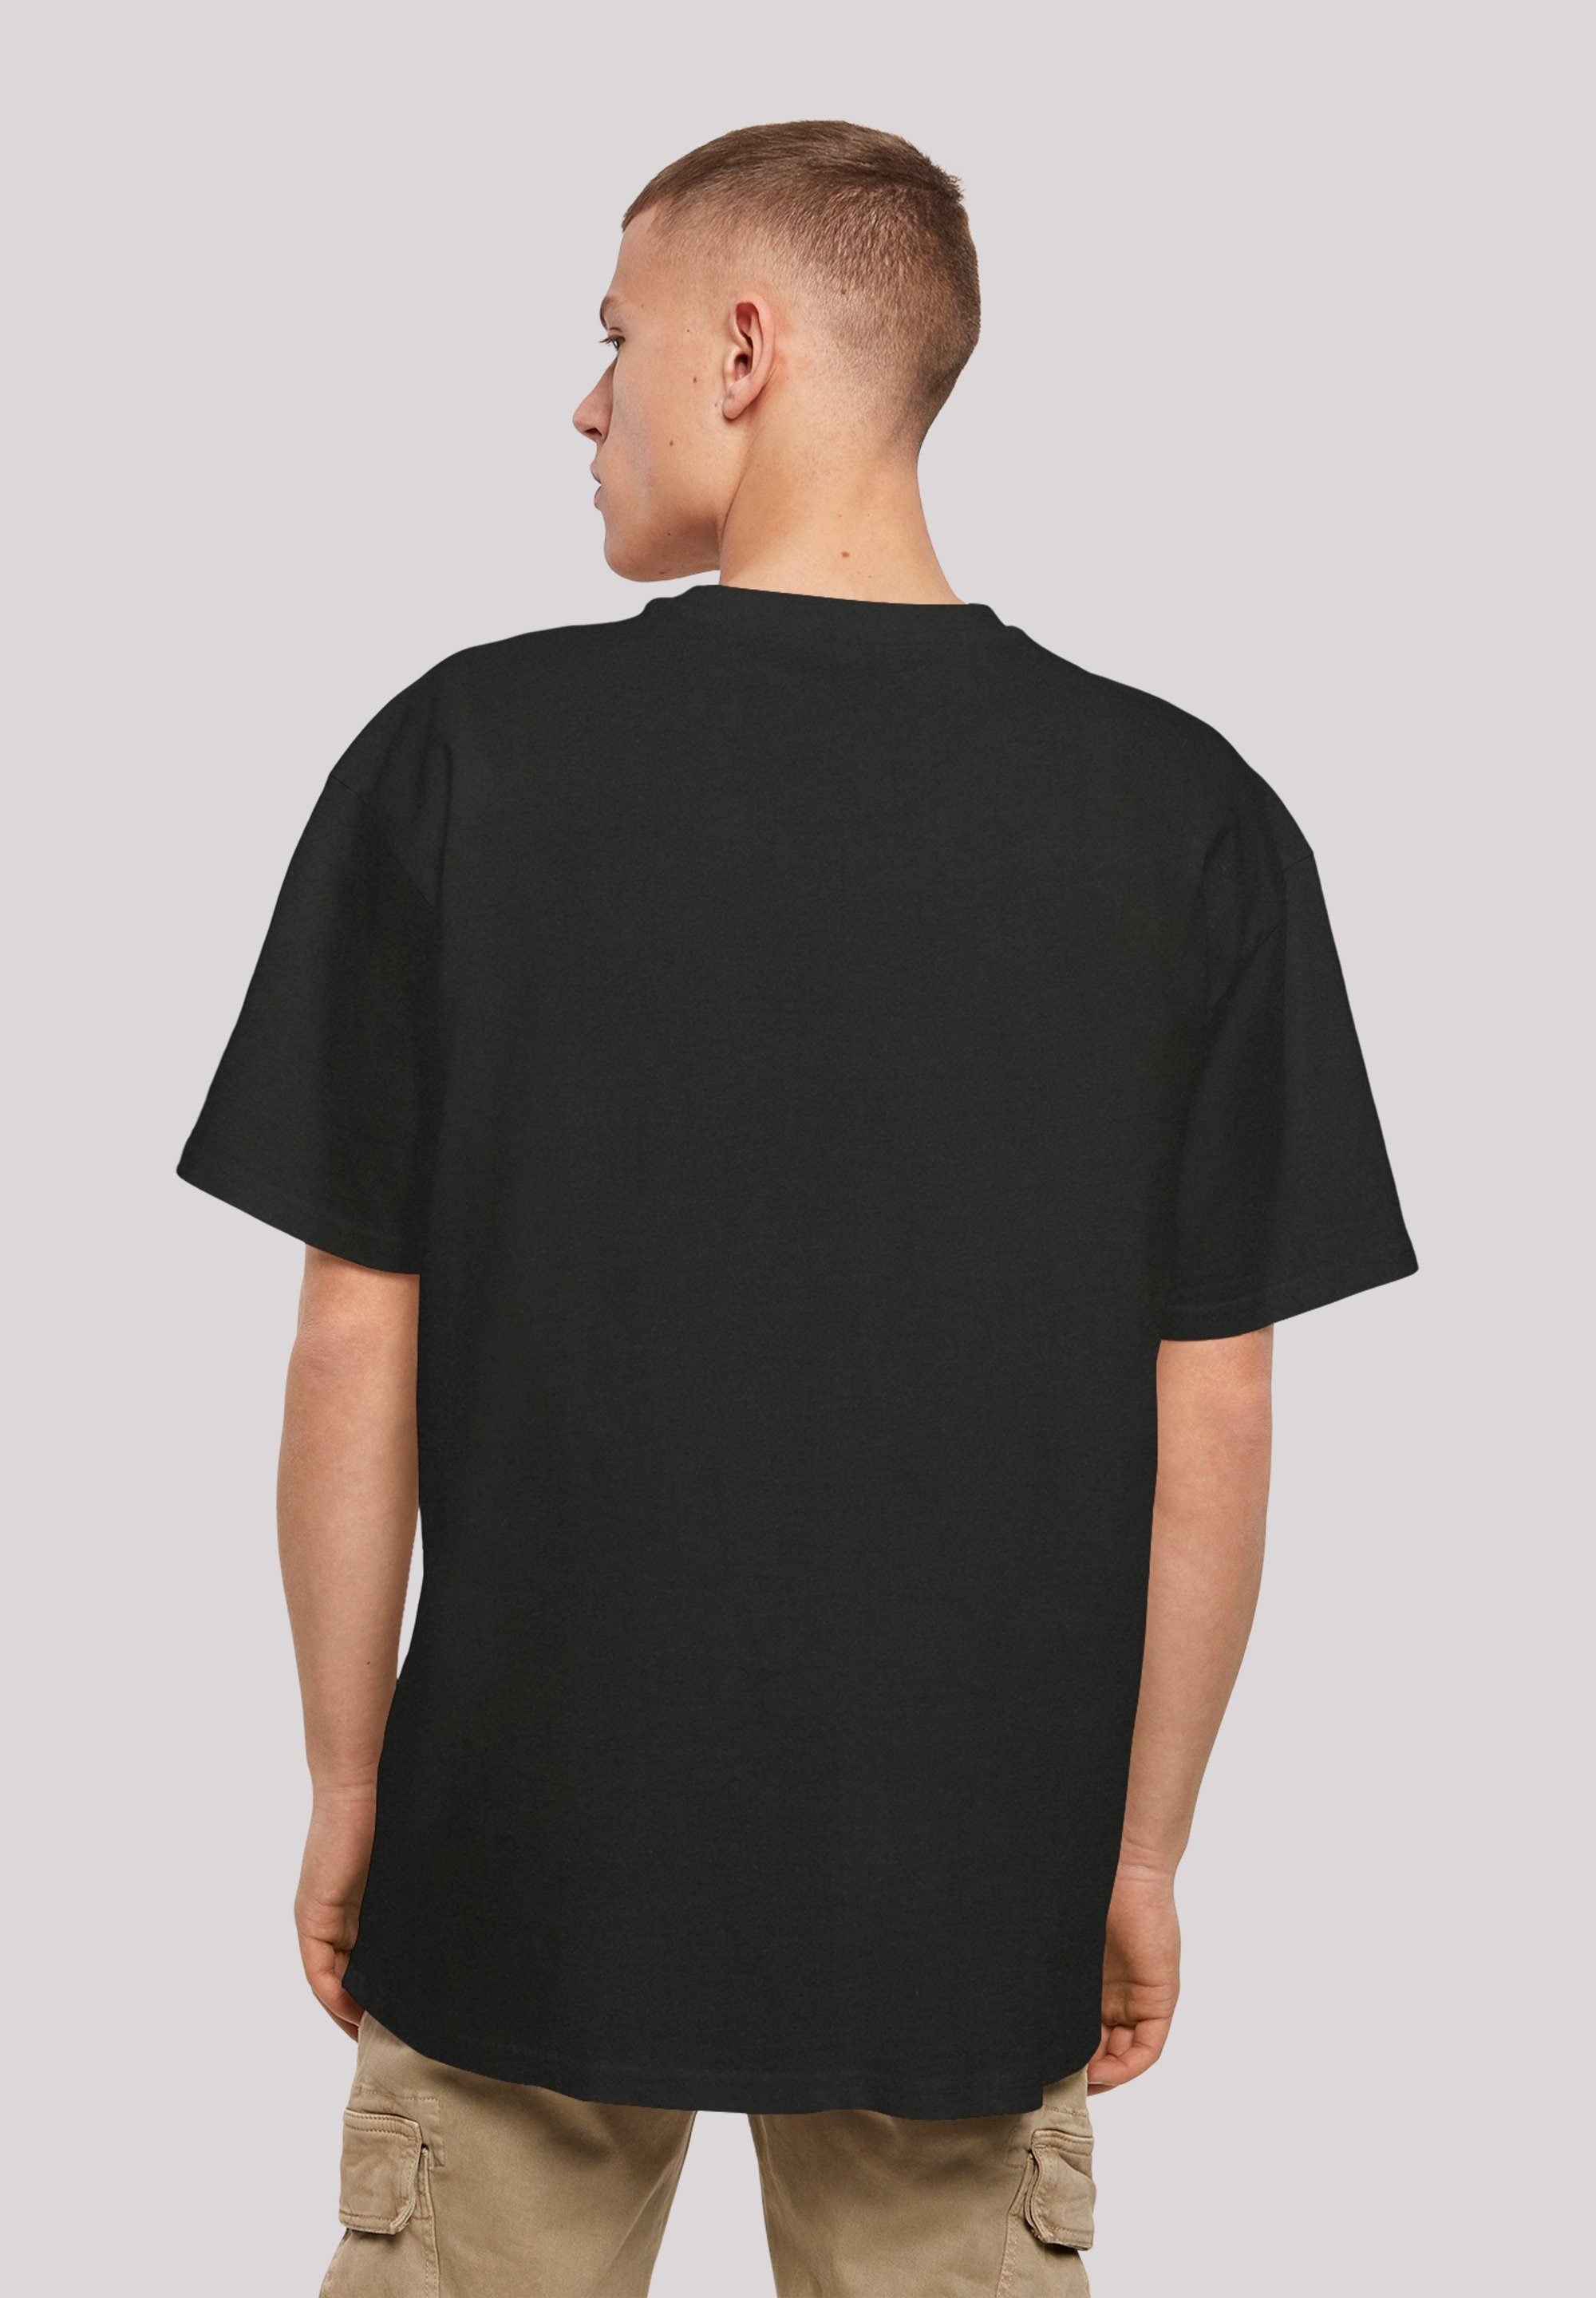 SKYLINE Print schwarz PARIS T-Shirt TEE F4NT4STIC OVERSIZE